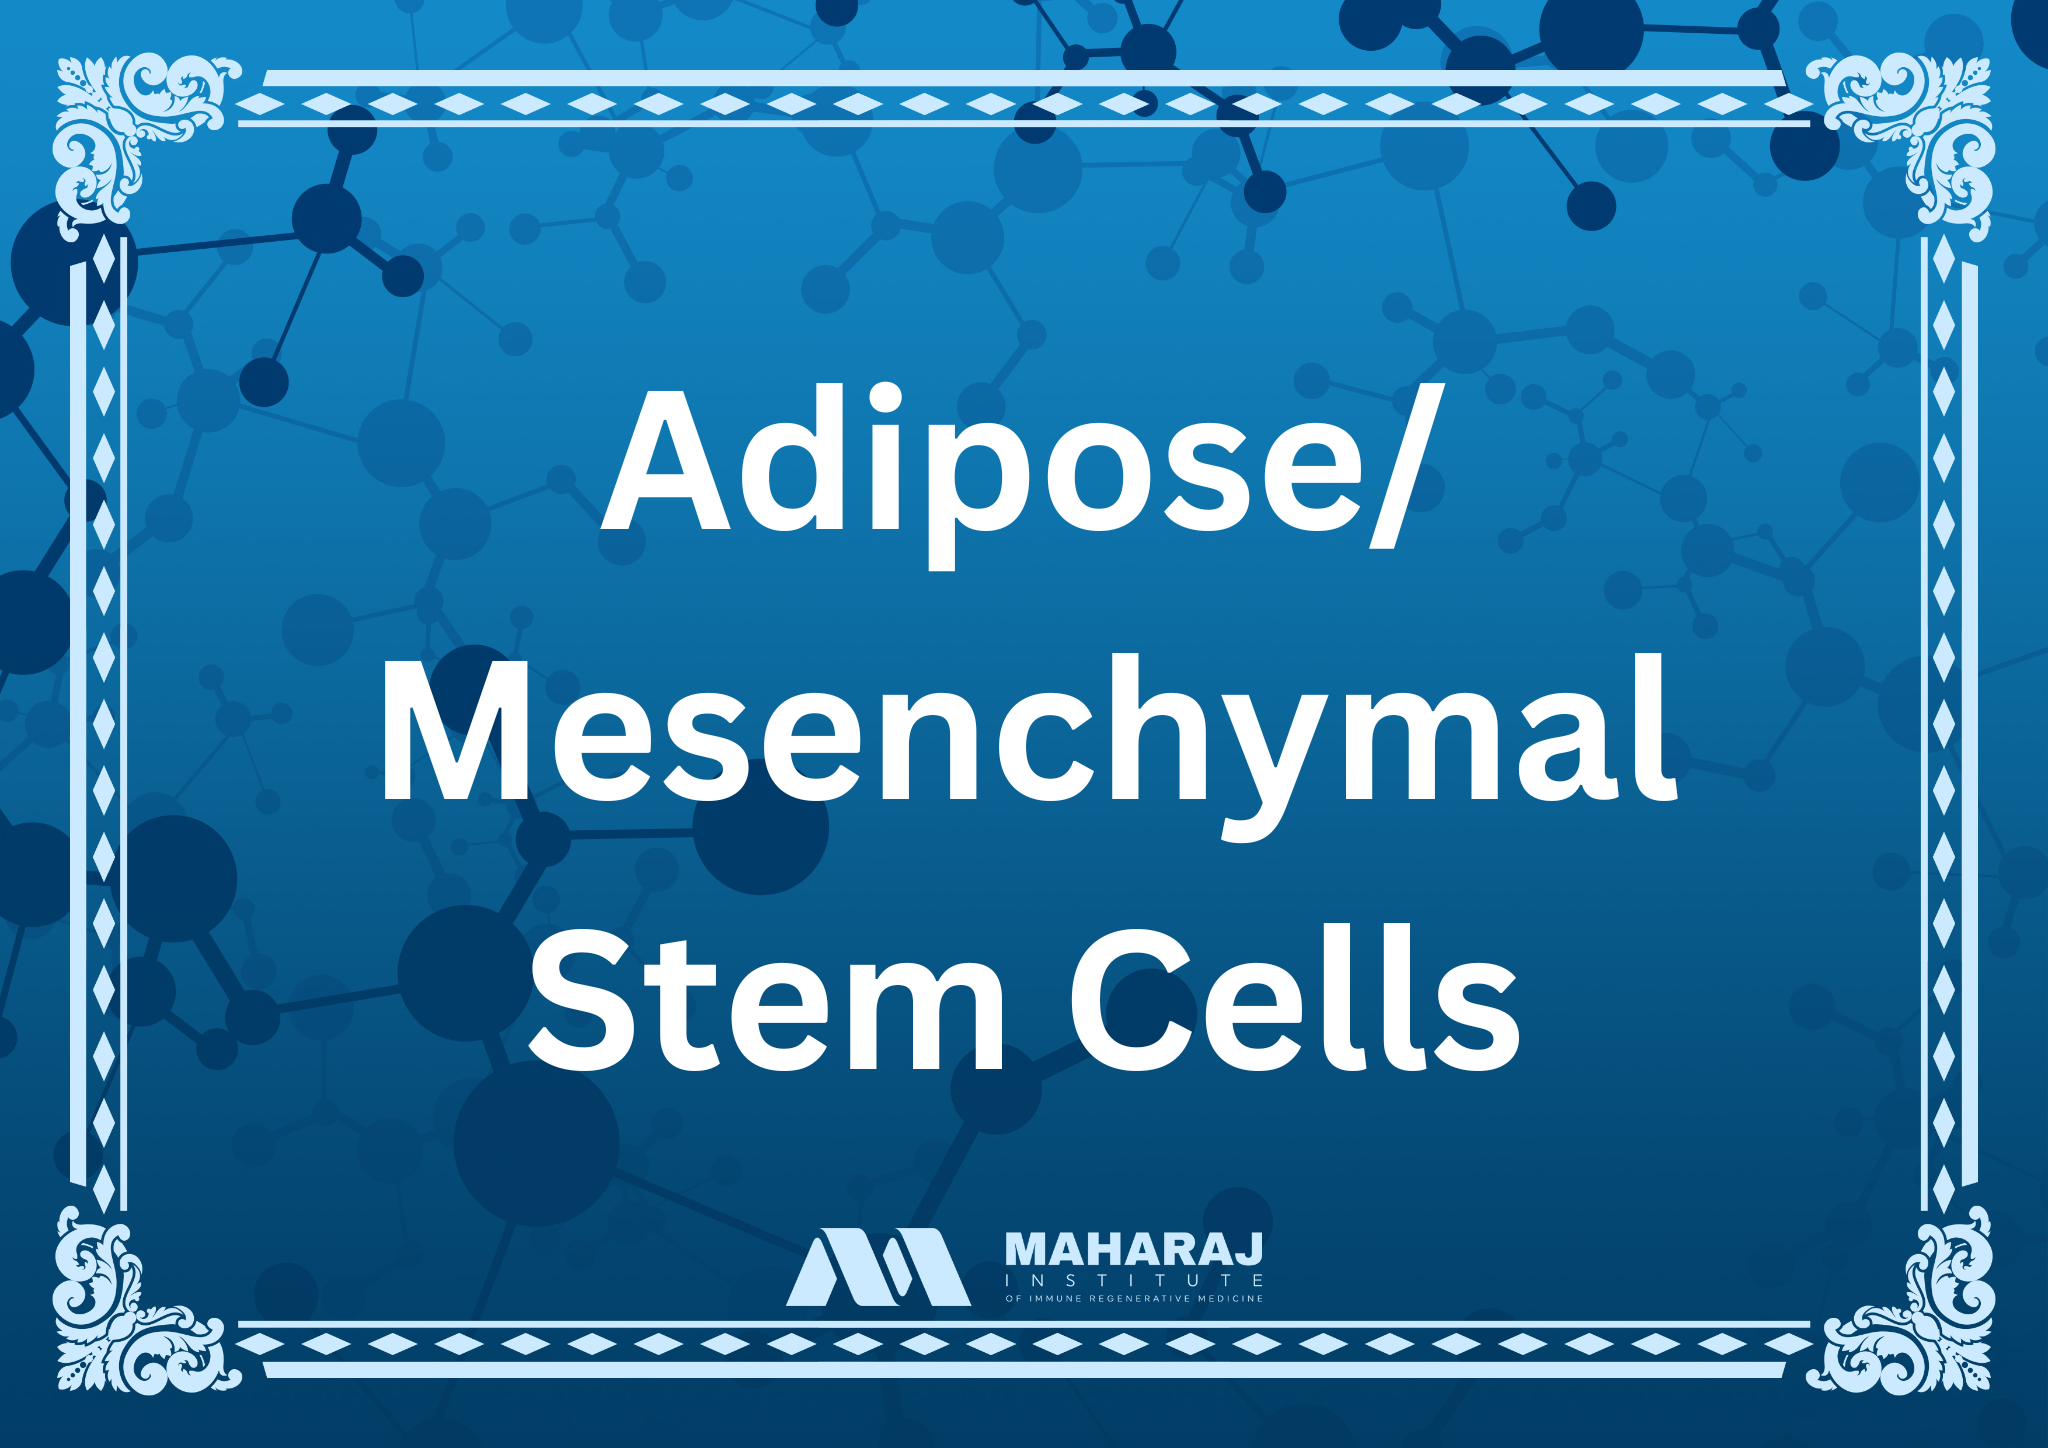 Adipose/Mesenchymal Stem Cells